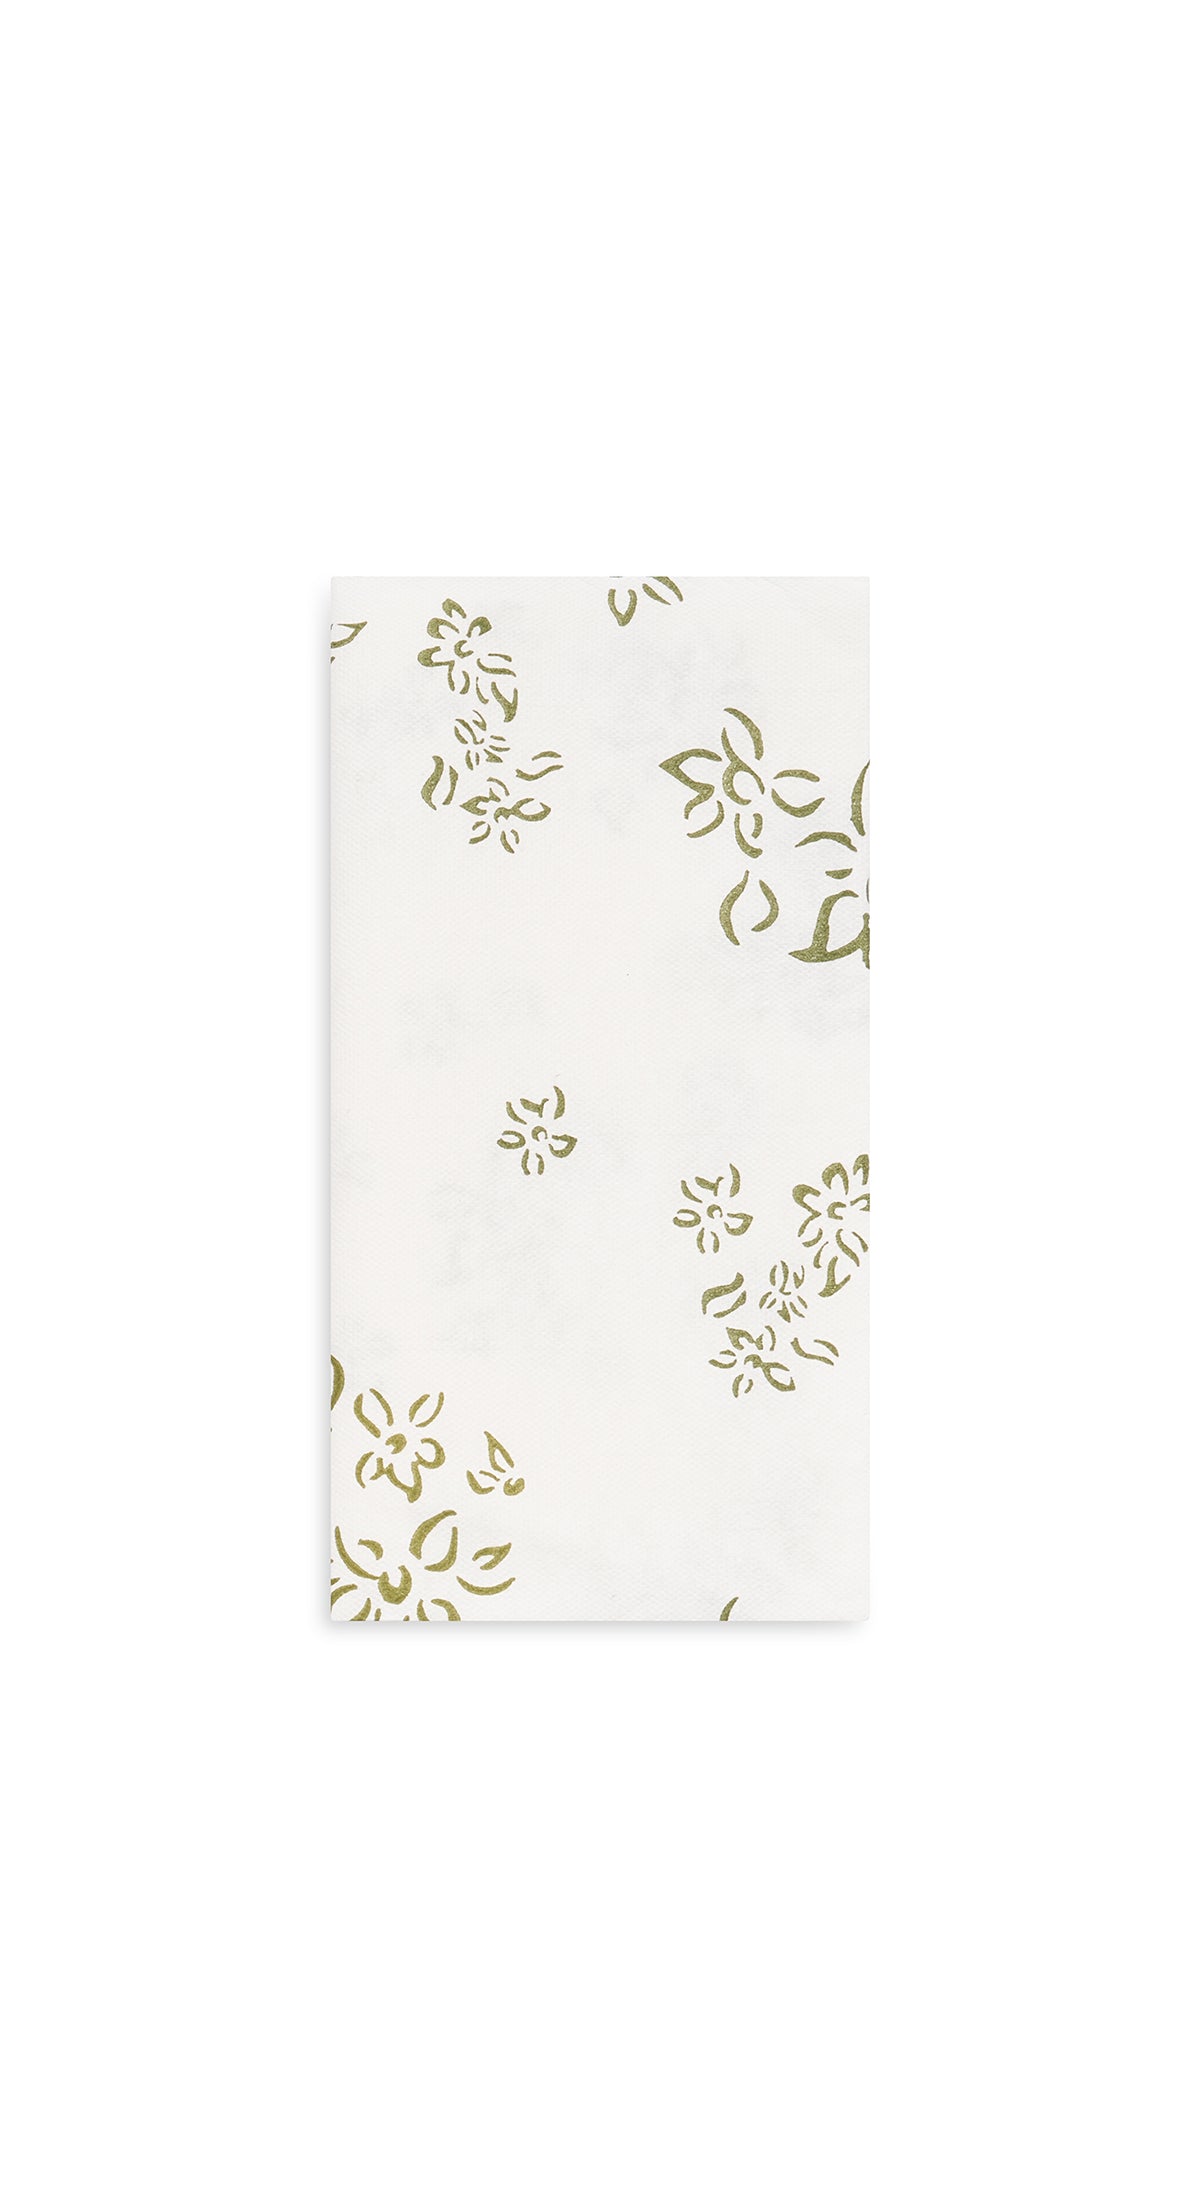 Summerill & Bishop Set of Twelve Falling Flower Paper Napkins in Avocado Green, 40x40cm